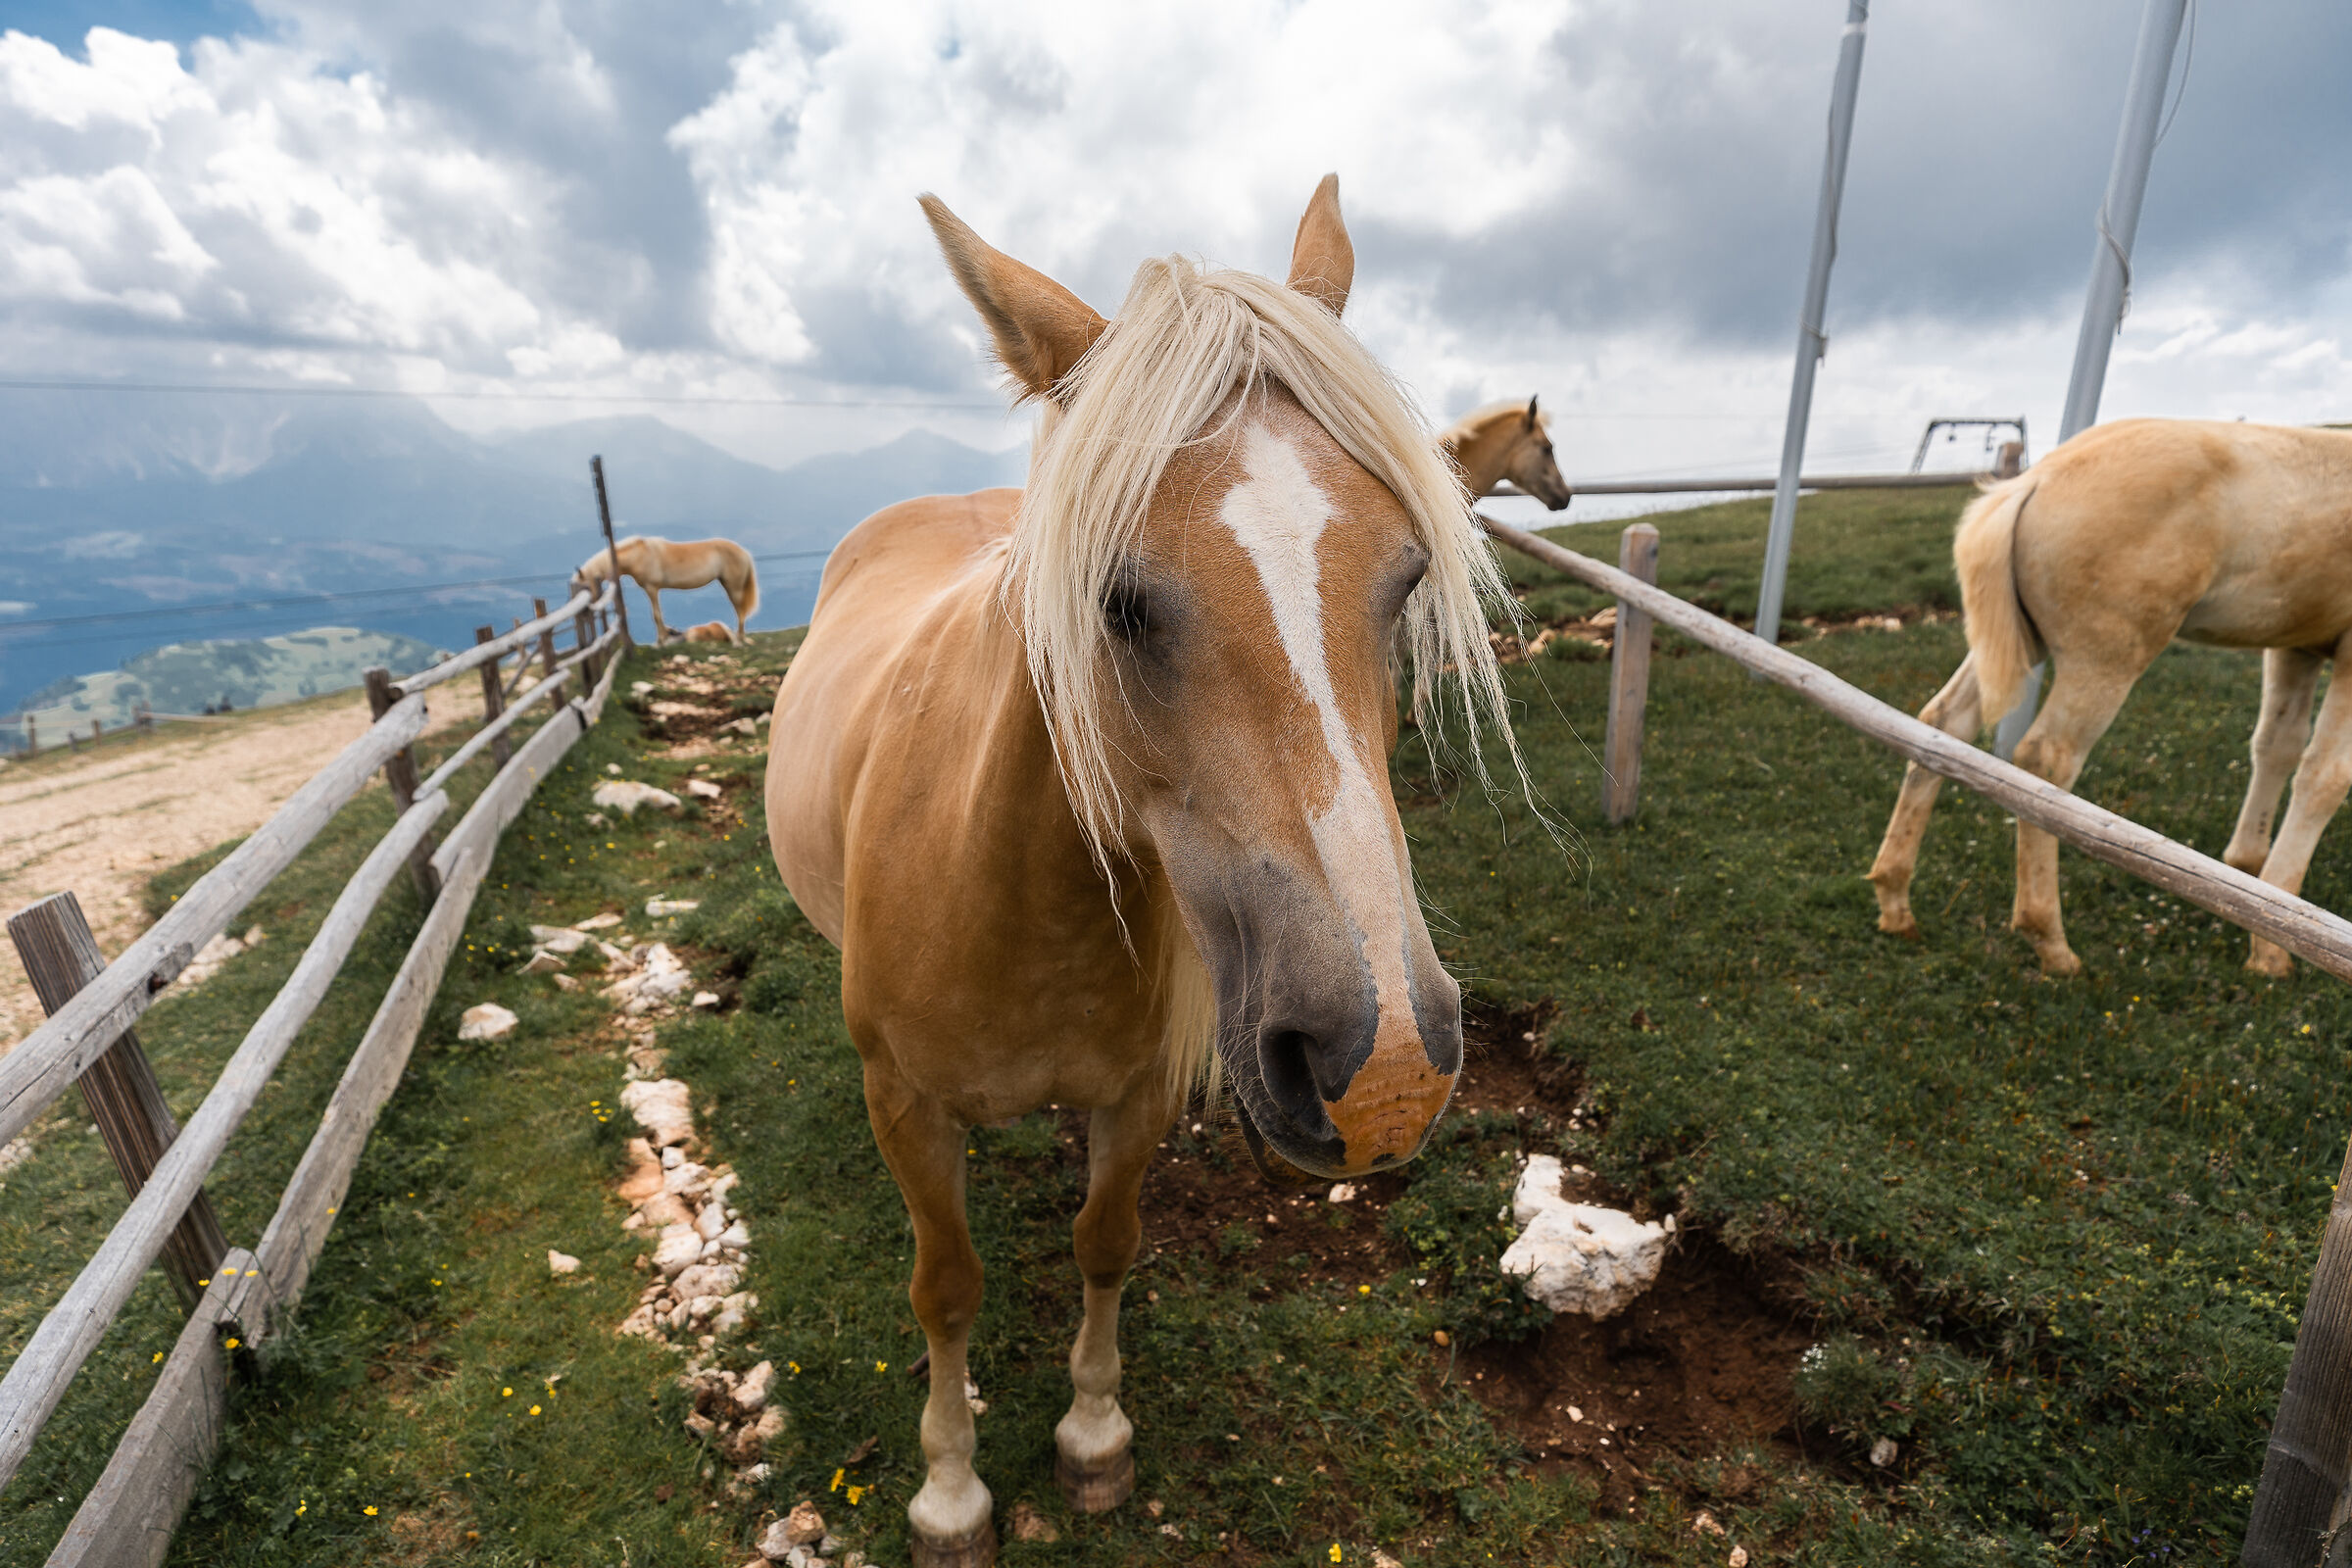 Horses in Alto Adige...